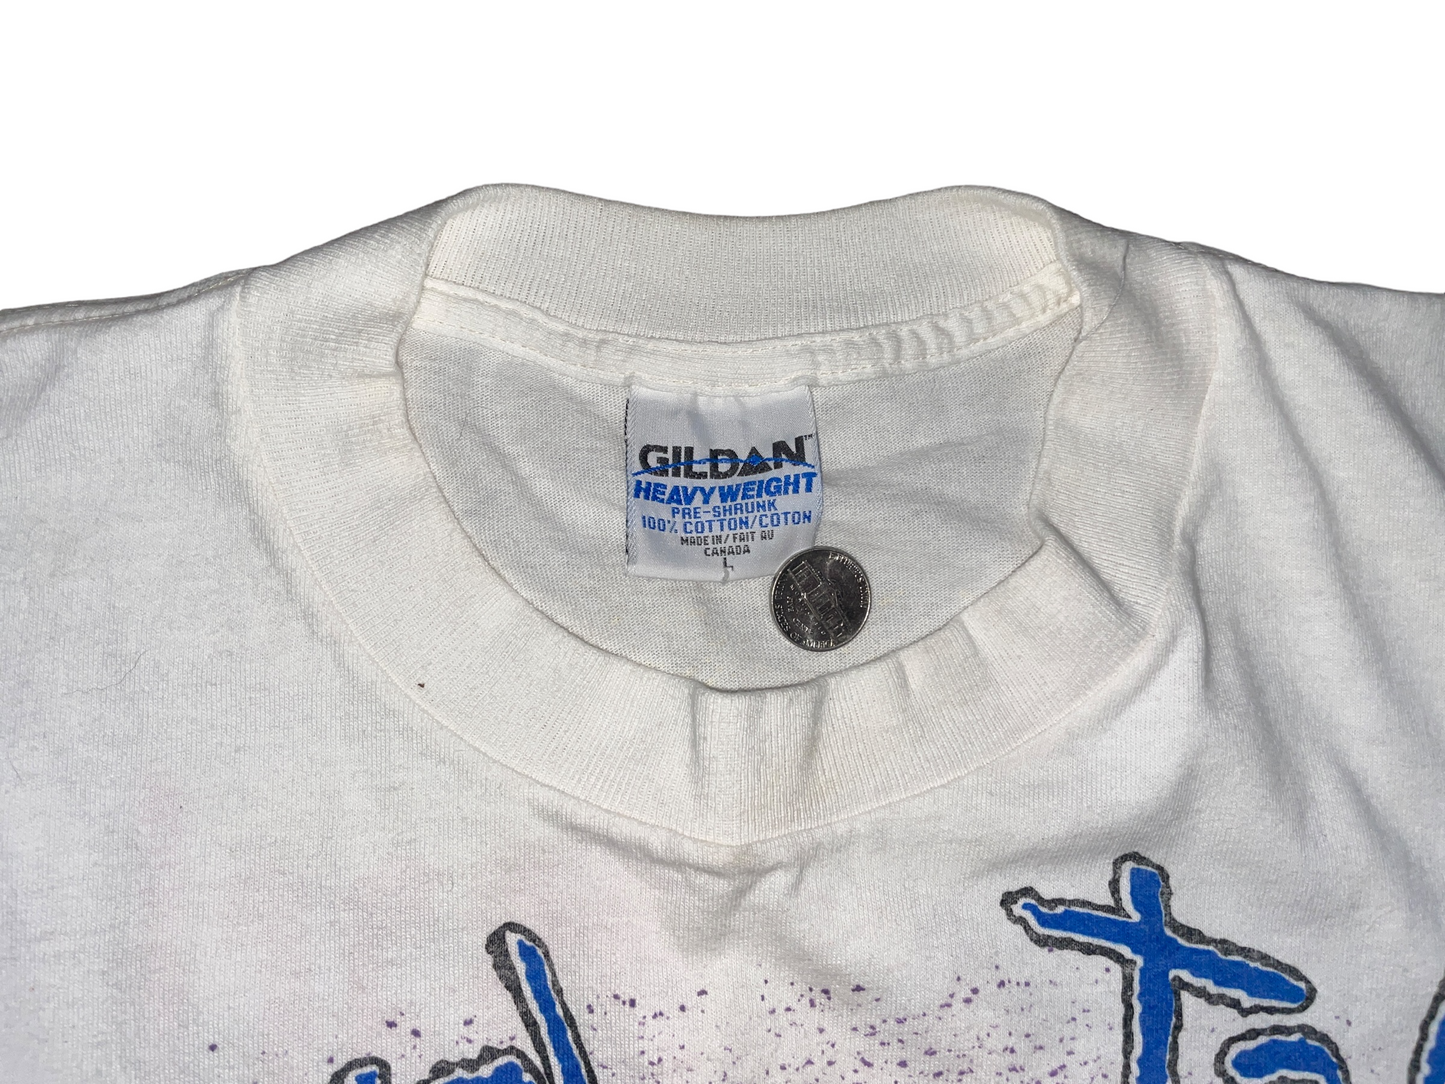 Vintage 1995 Peal Jam World Tour T-Shirt